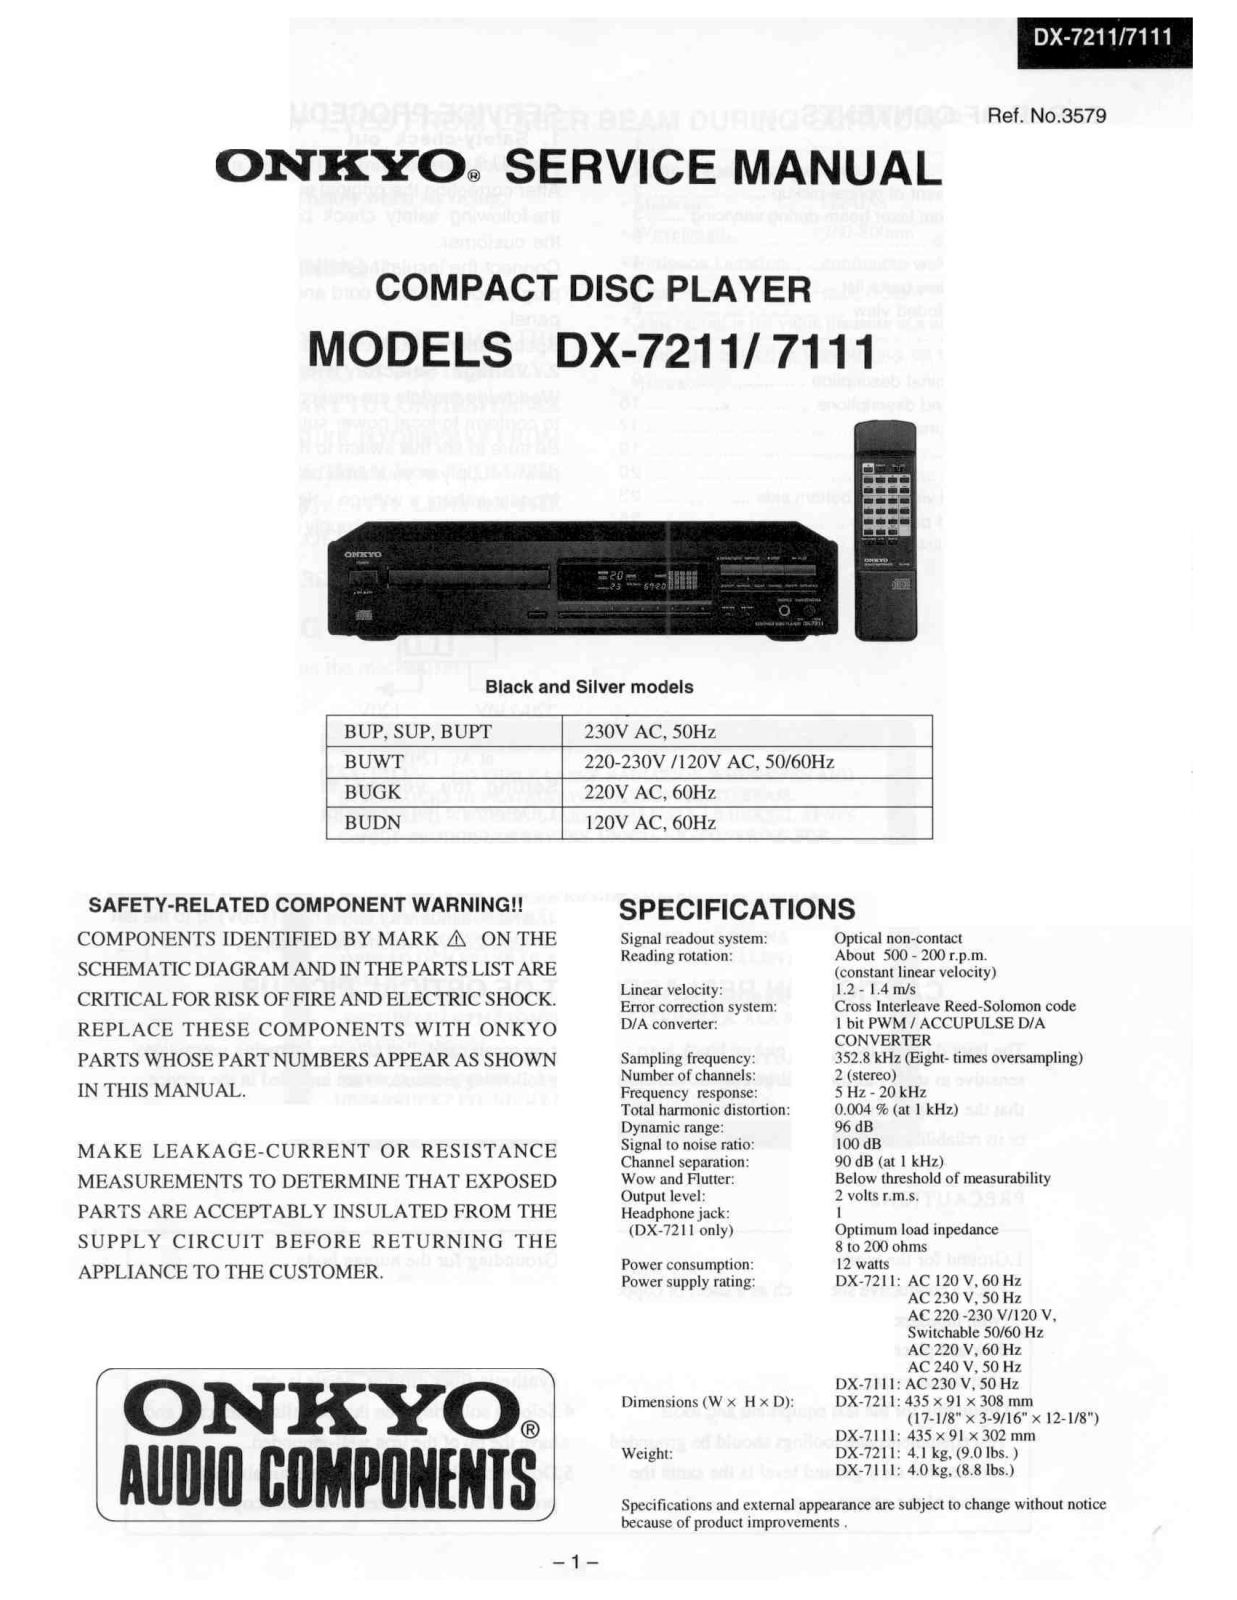 Onkyo DX-7111 Service manual